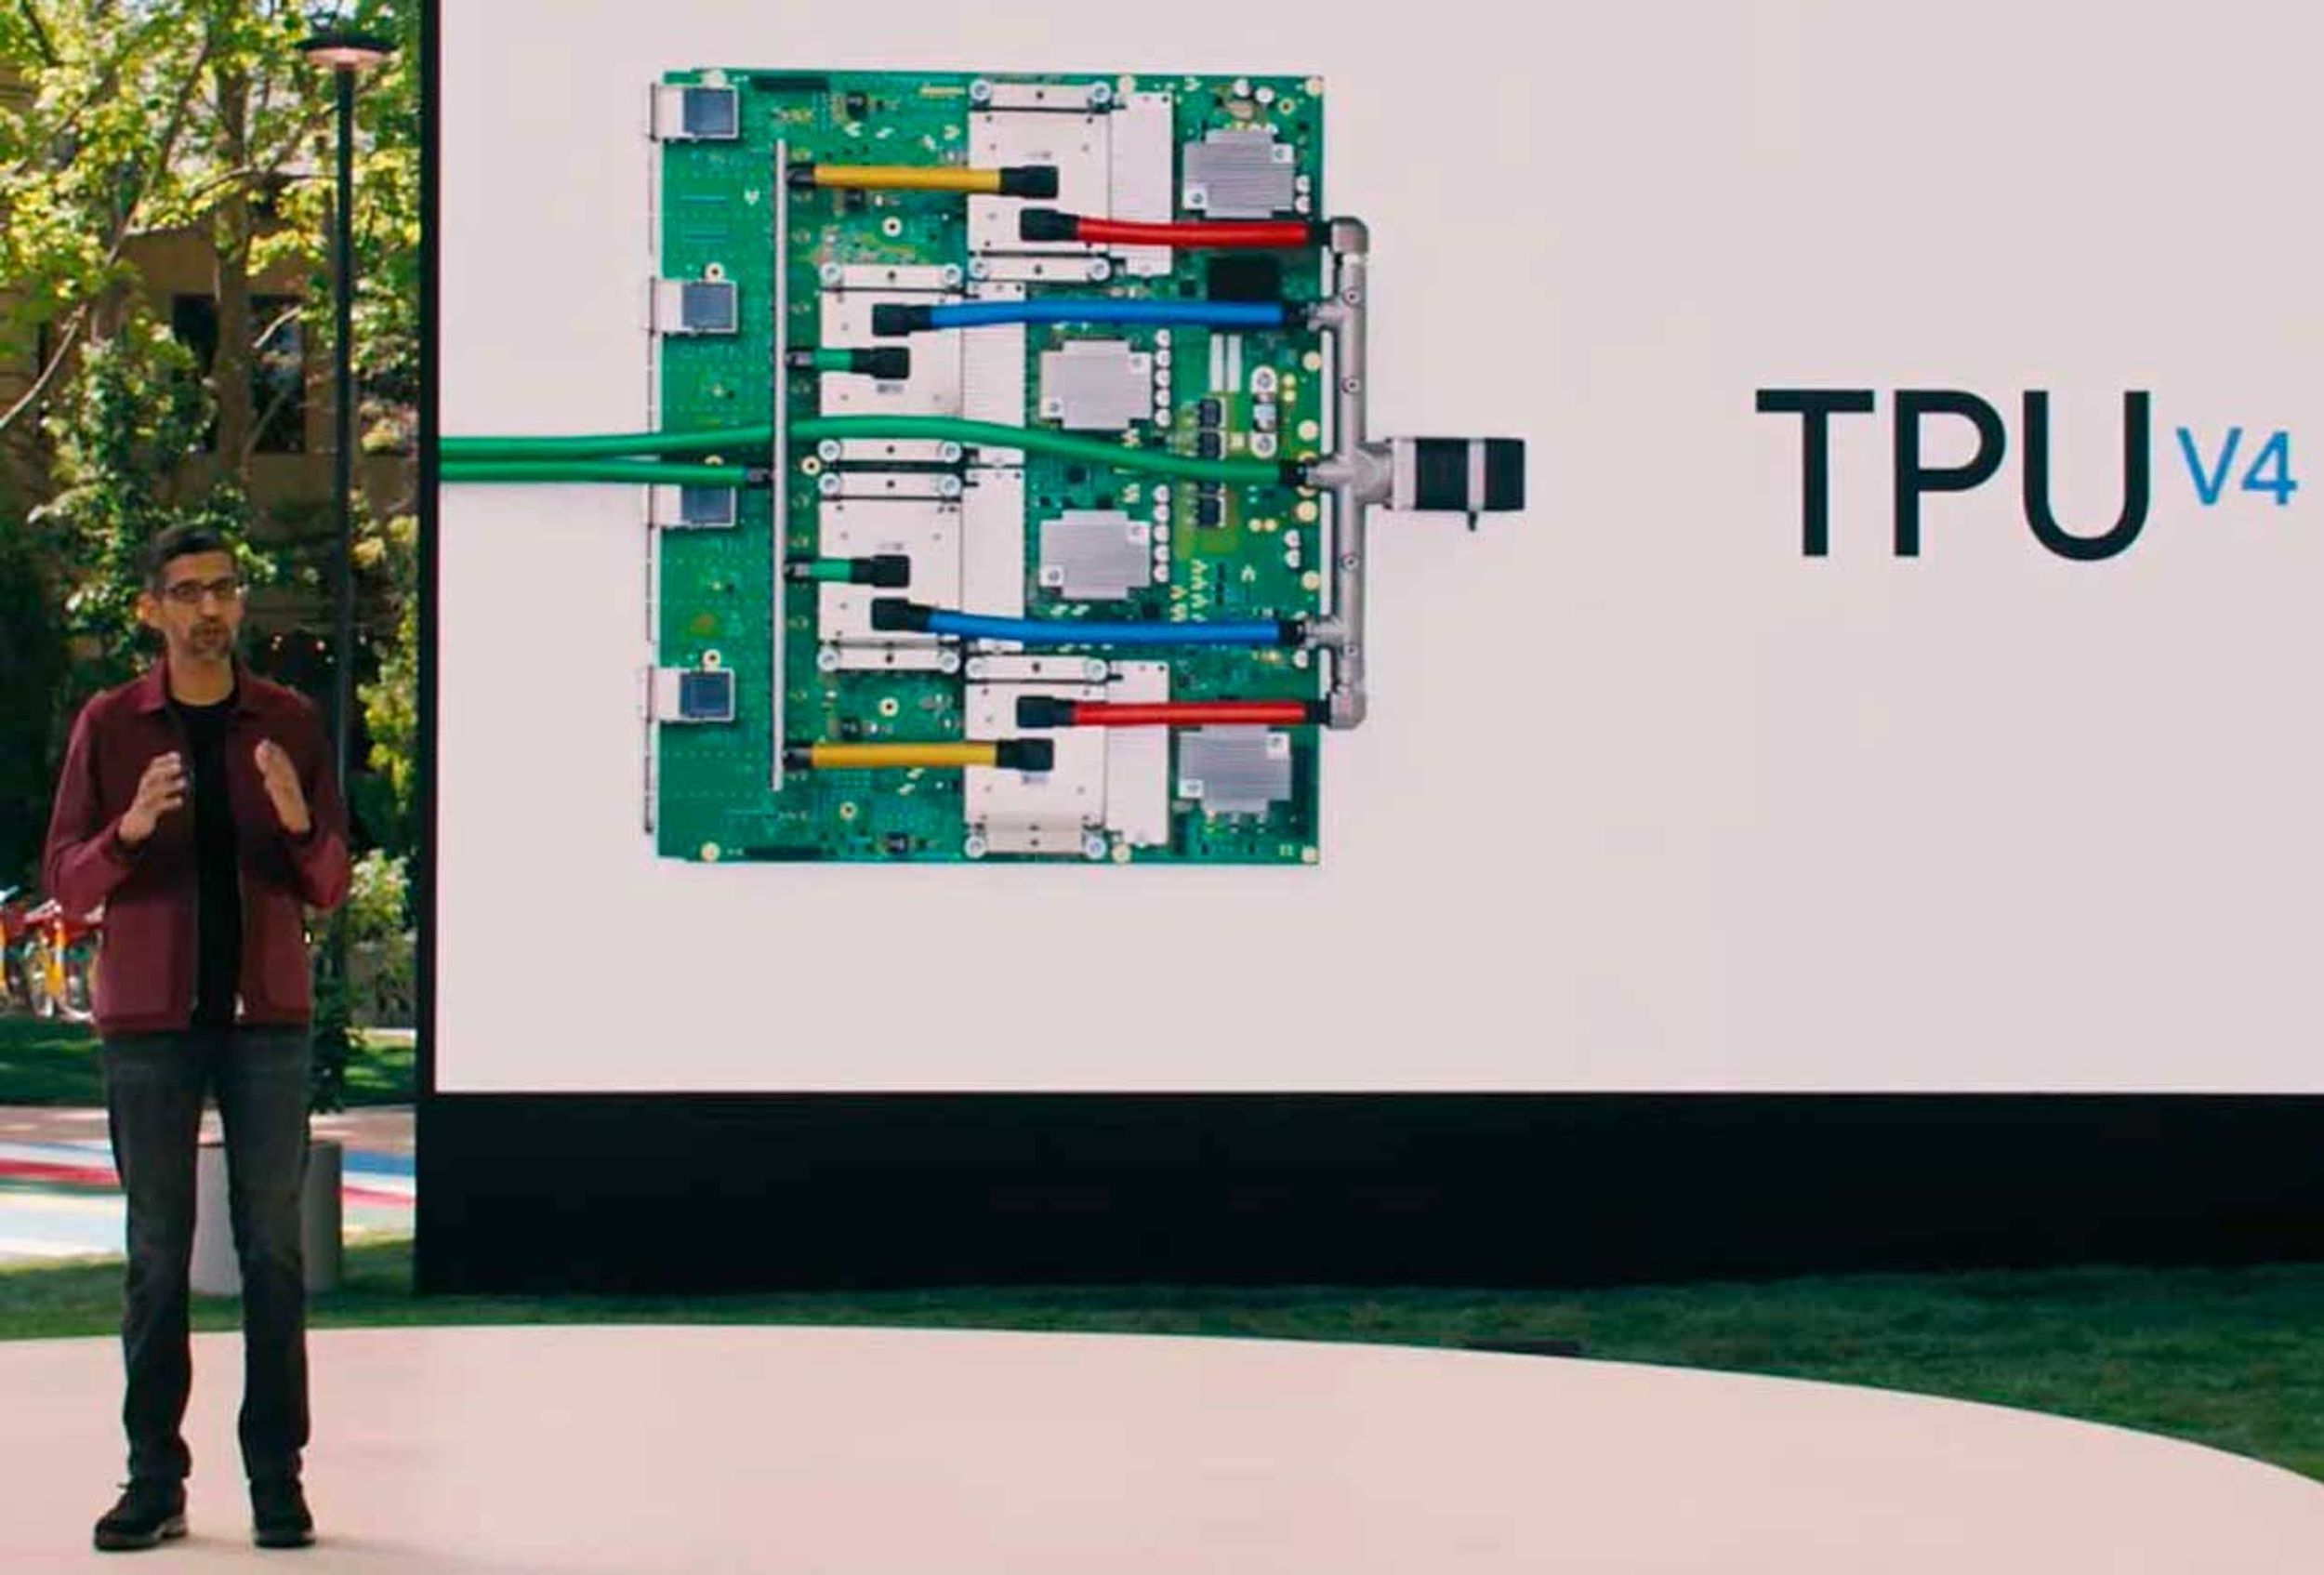 Google CEO Sundar Pichai presenting about the company’s latest AI chip the TPU V4 (Tensor Processing Unit version 4).